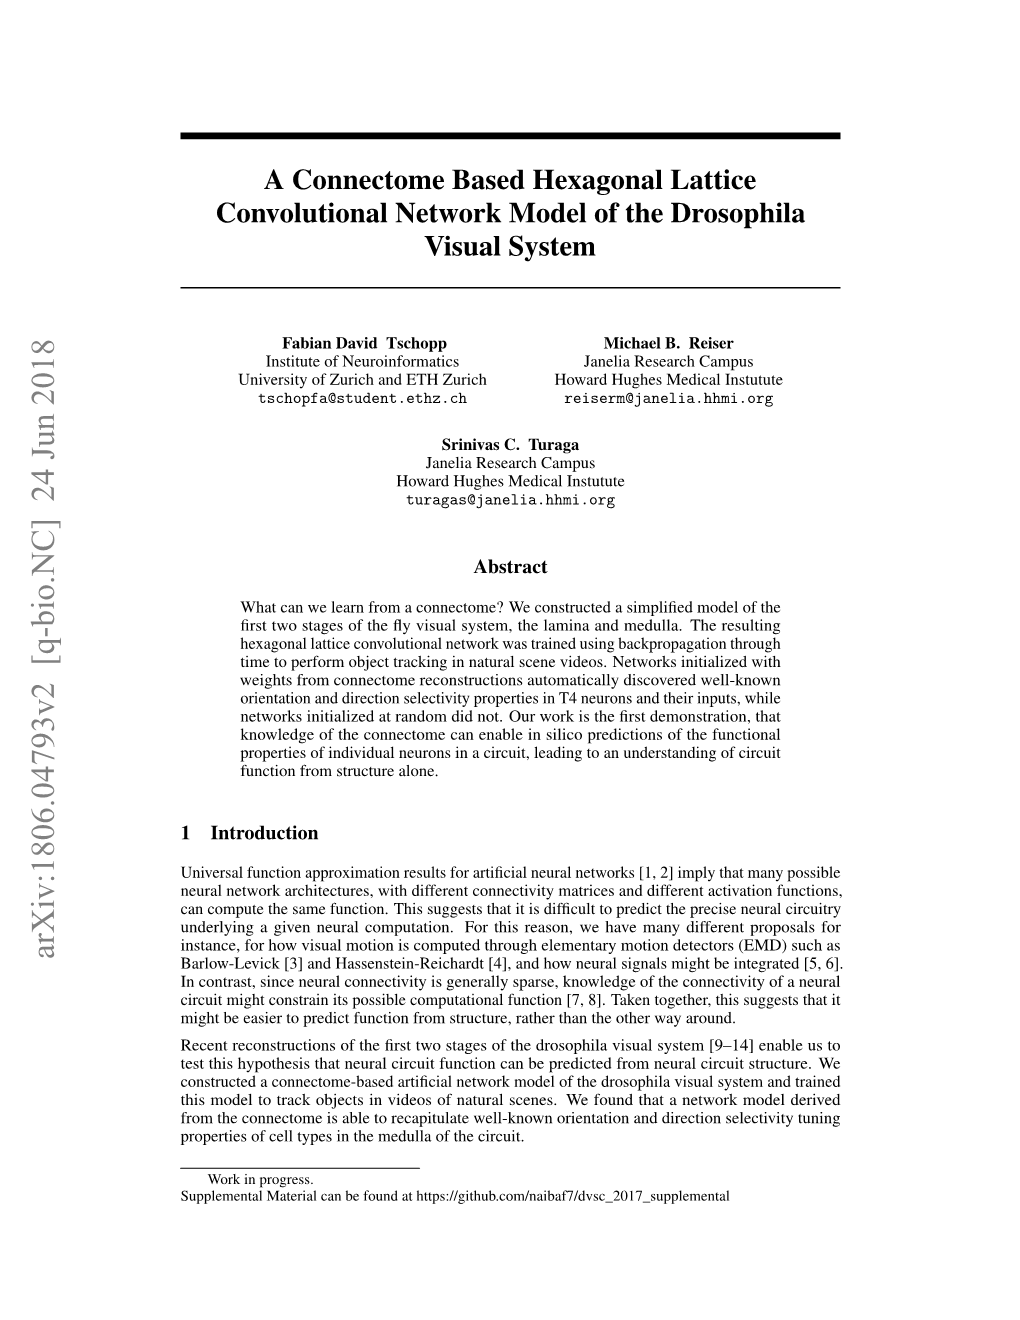 A Connectome Based Hexagonal Lattice Convolutional Network Model of the Drosophila Visual System